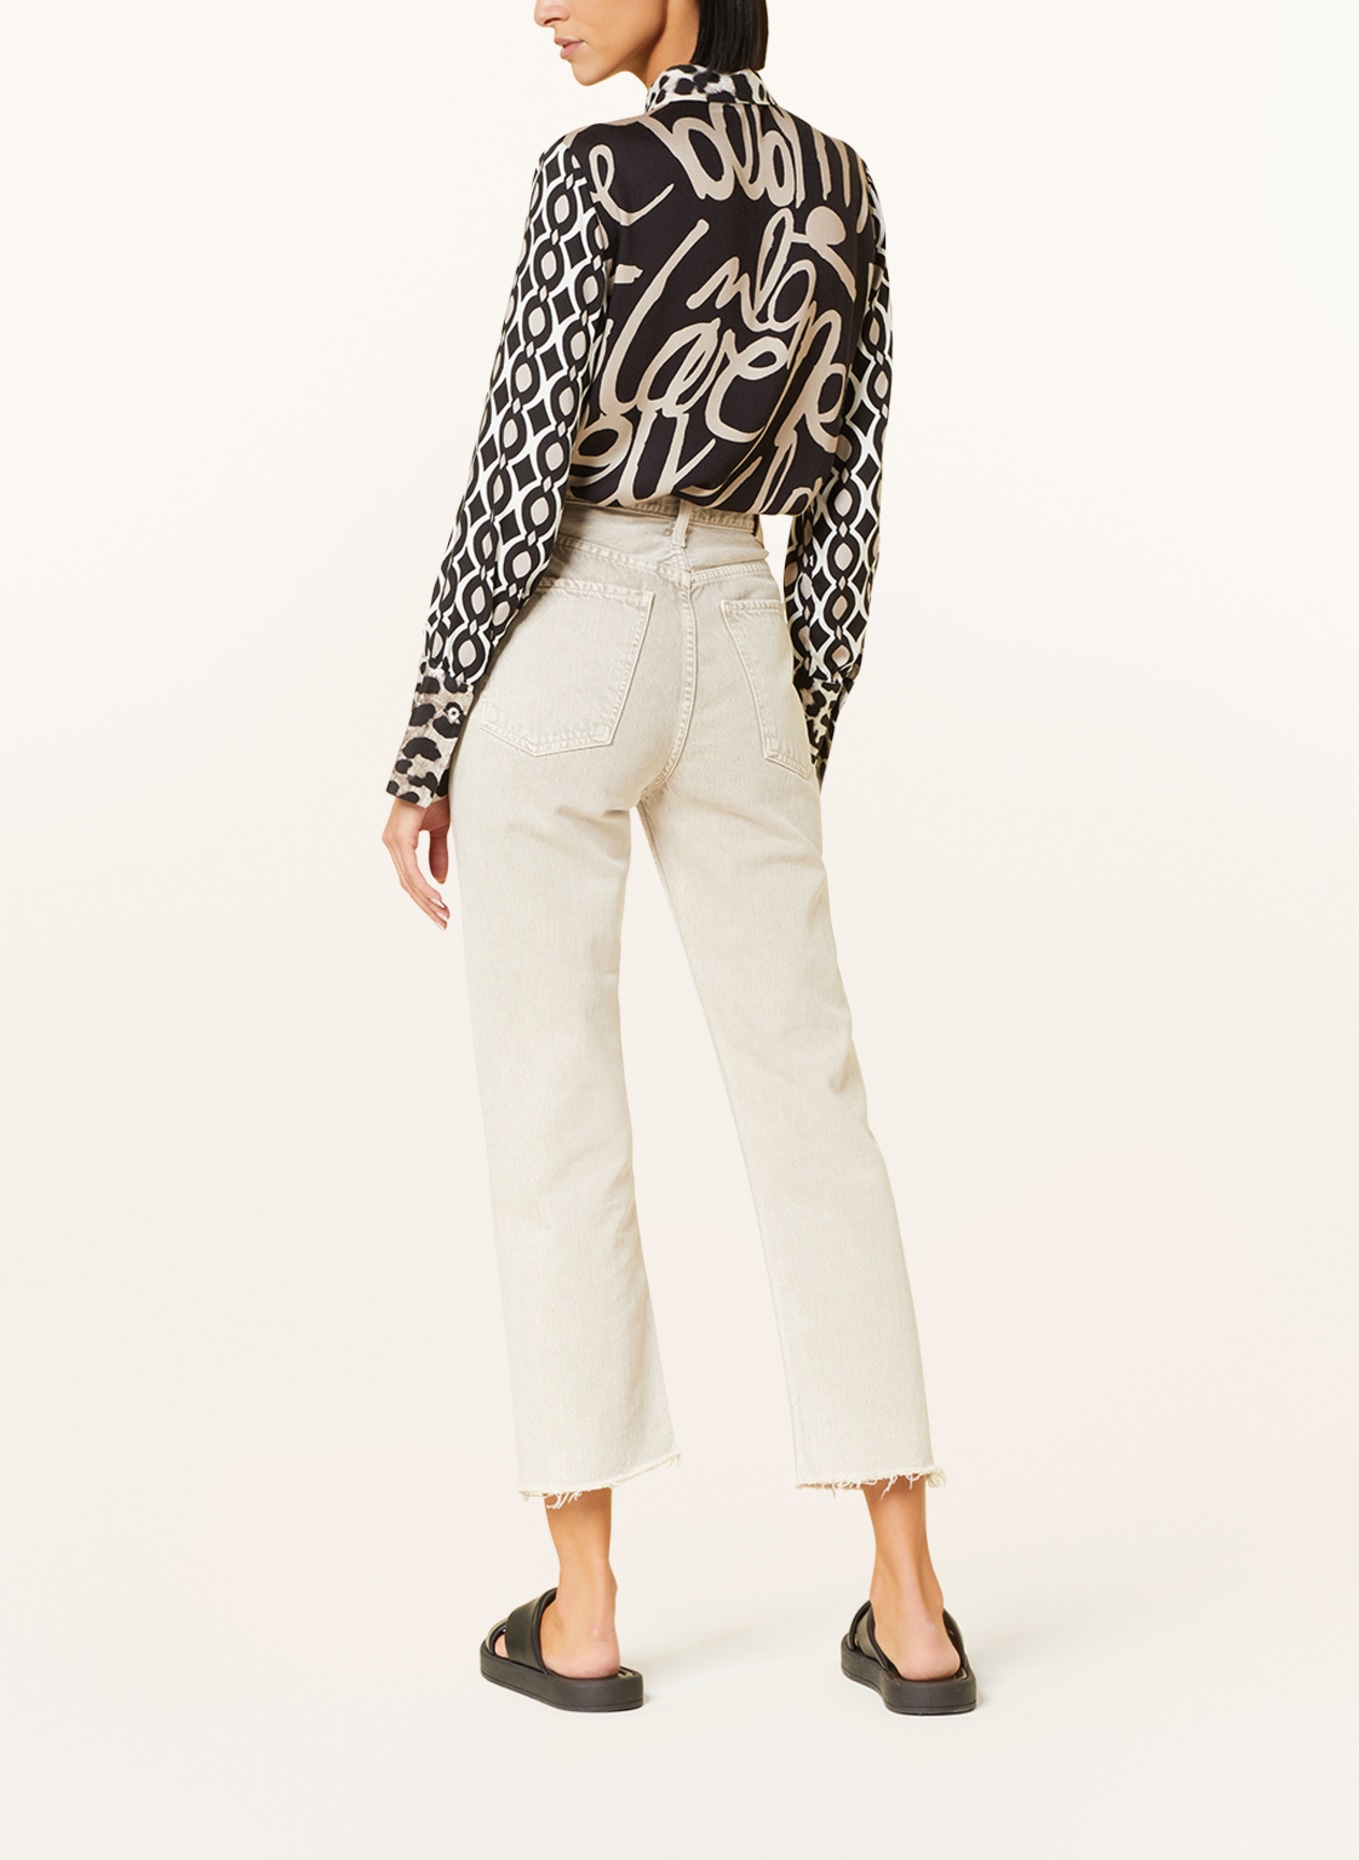 Emily VAN DEN BERGH Shirt blouse, Color: BLACK/ WHITE/ GRAY (Image 3)